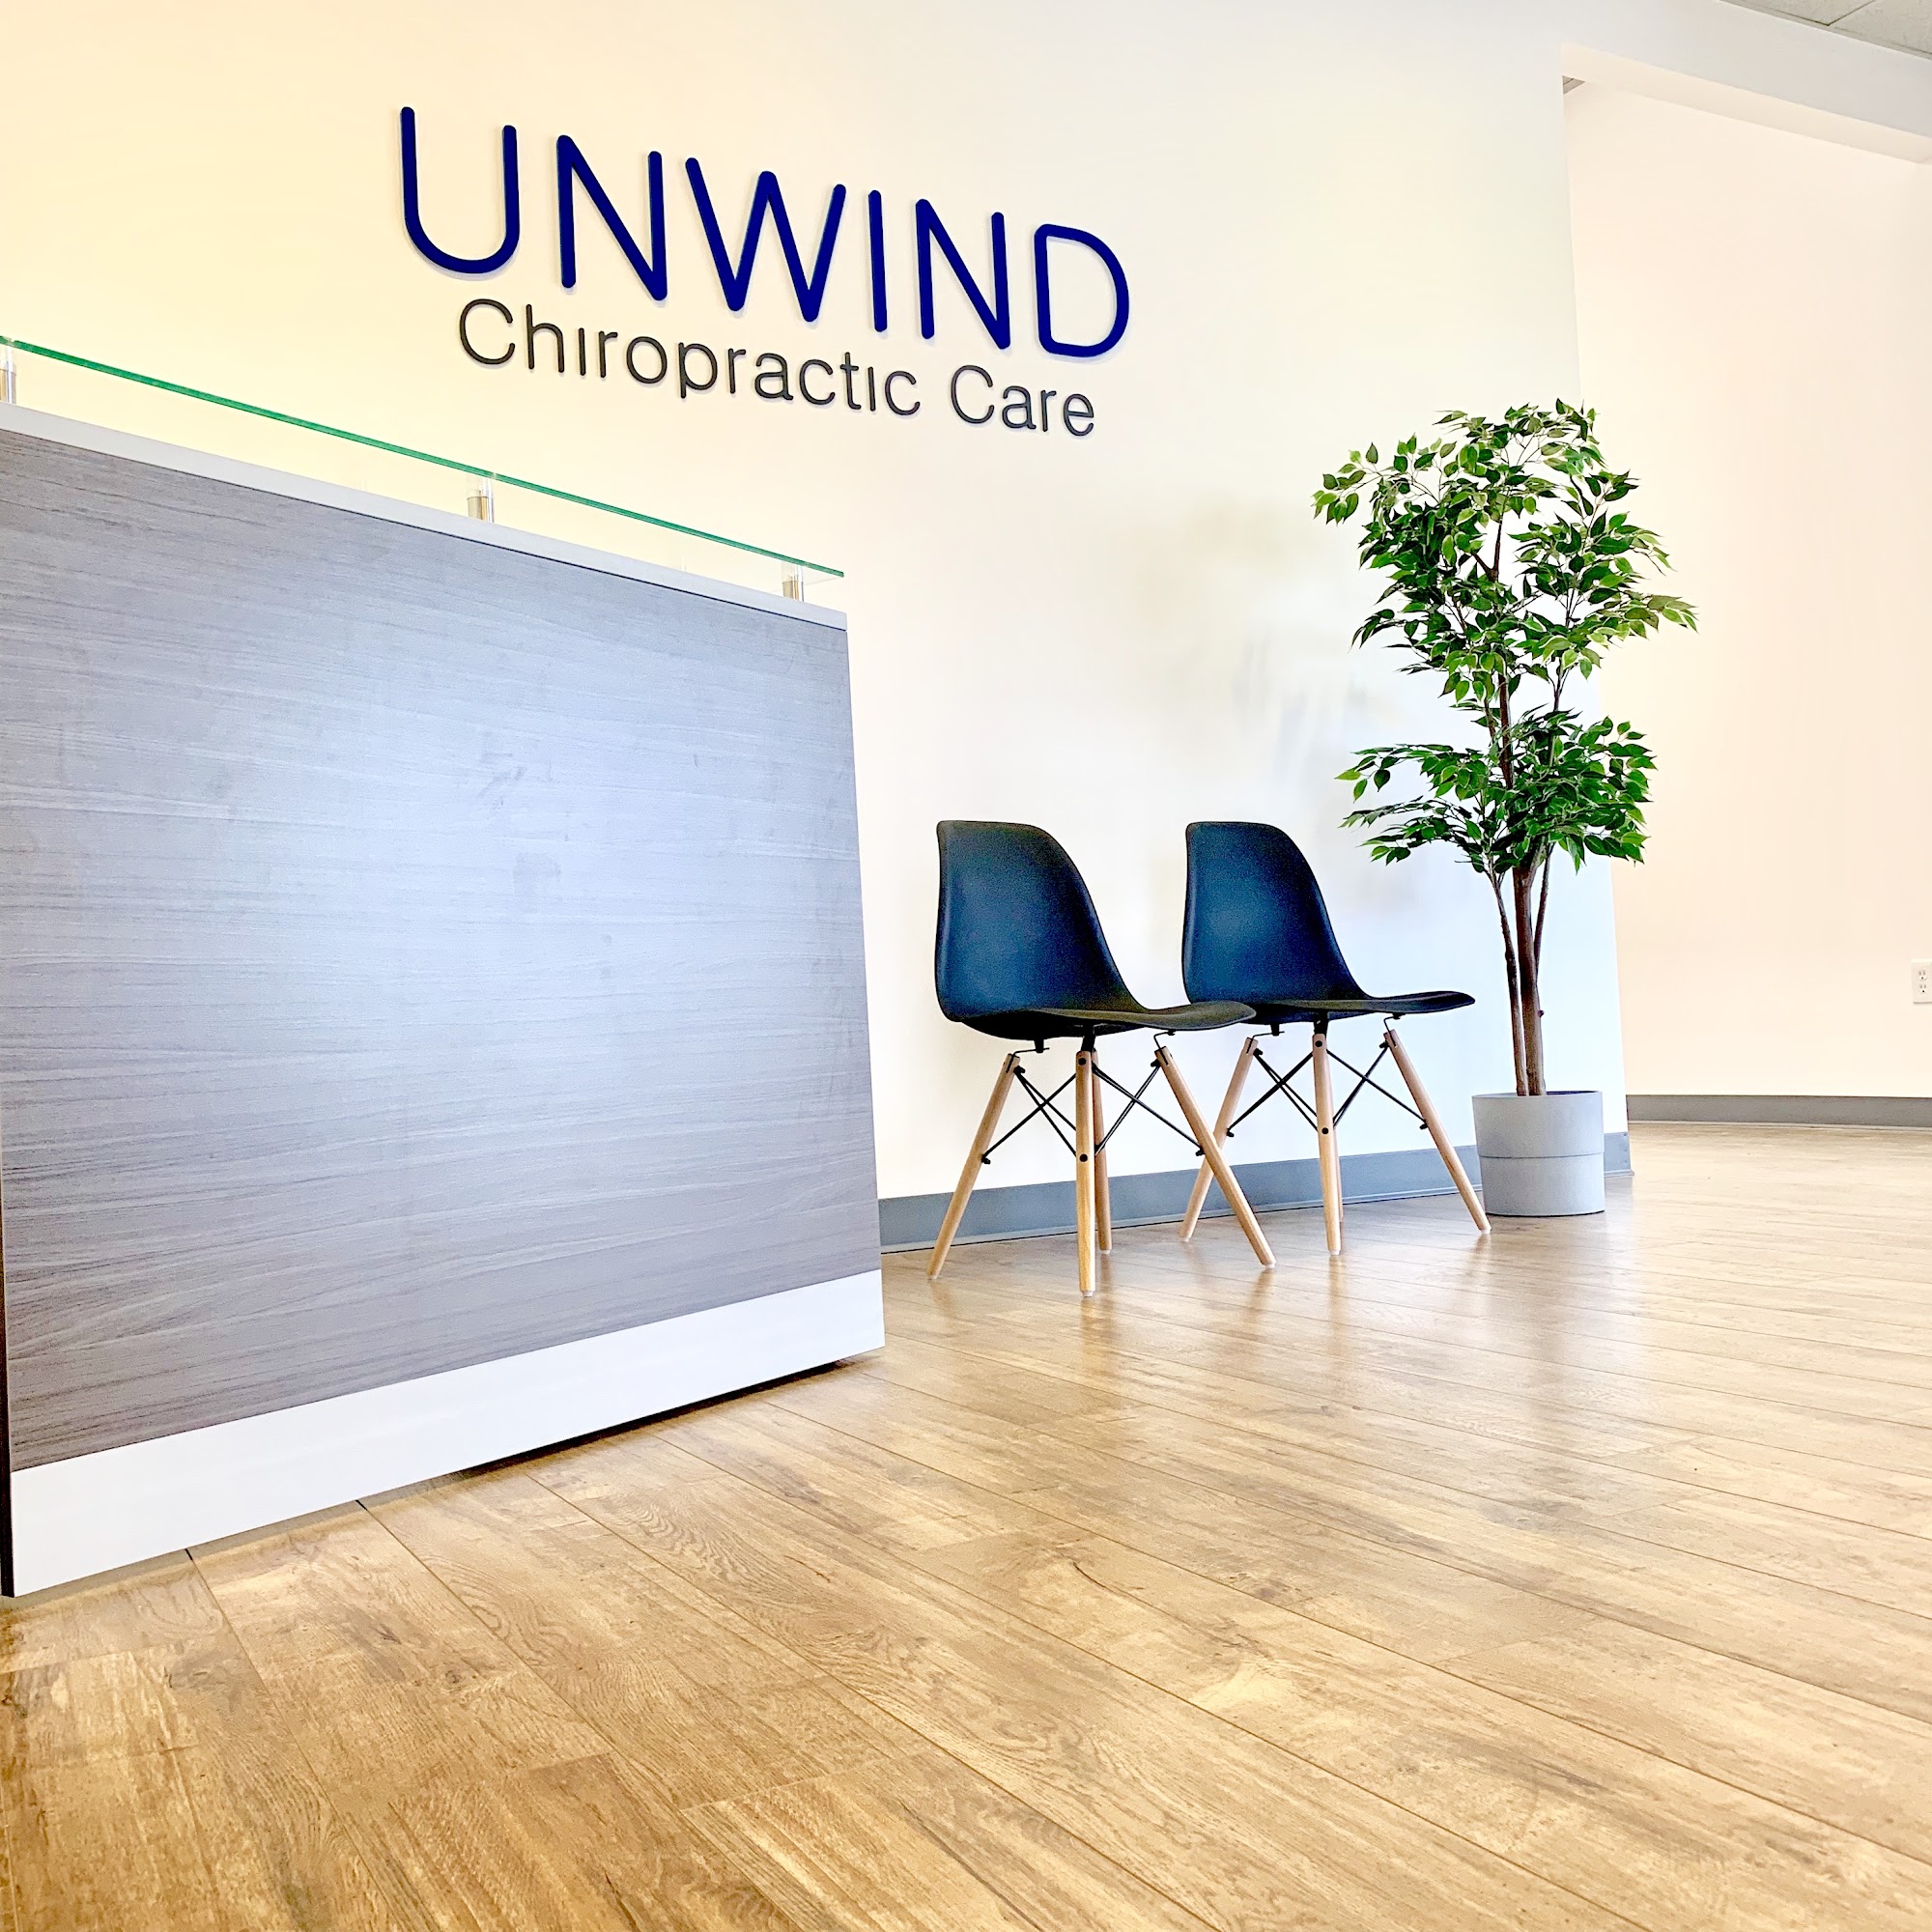 Unwind Chiropractic Care 1189 Huntington Dr, Duarte California 91010